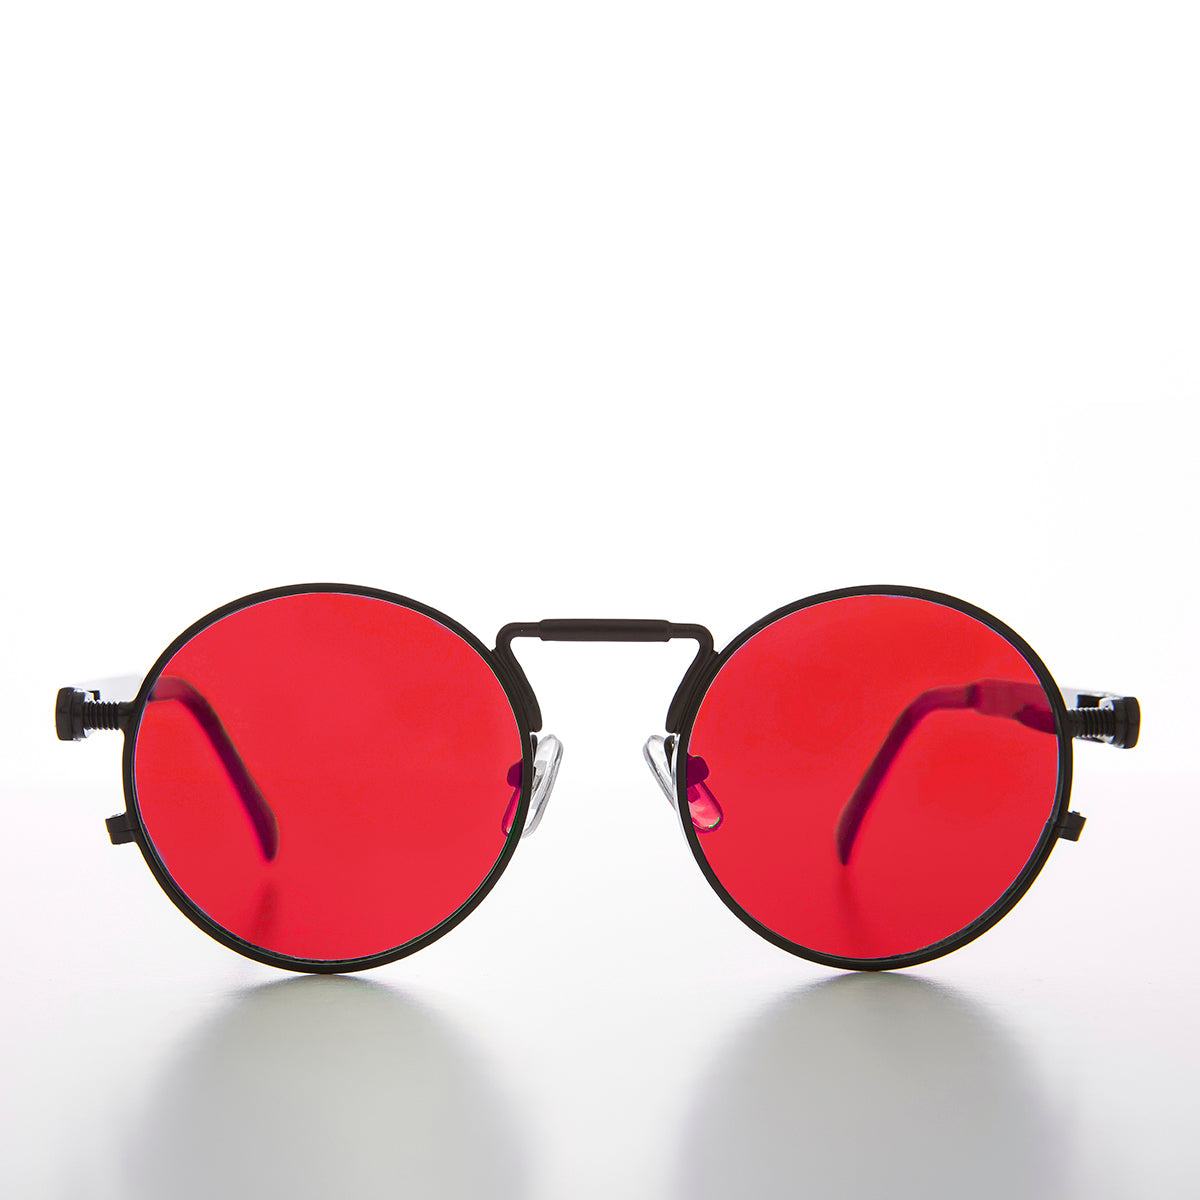 Black Round sunglasses for men